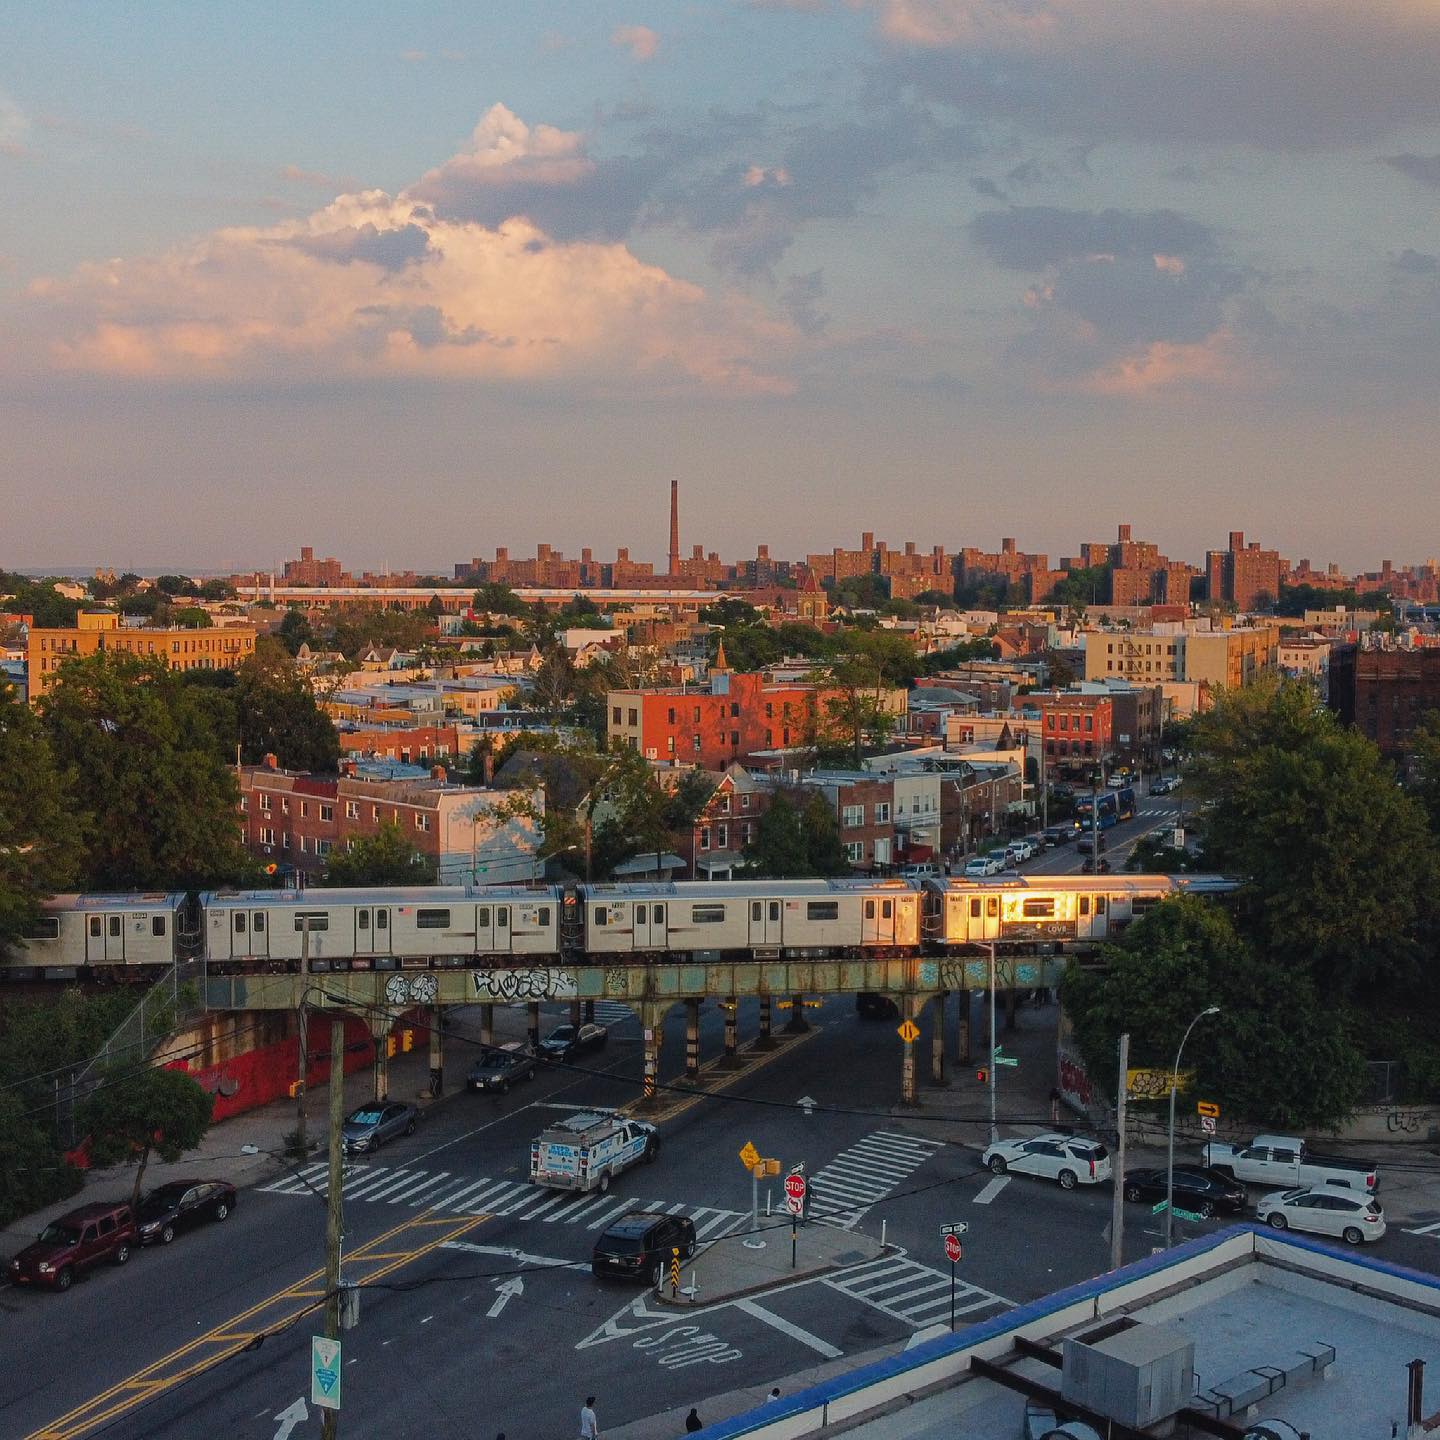 The Bronx - Sunset City 